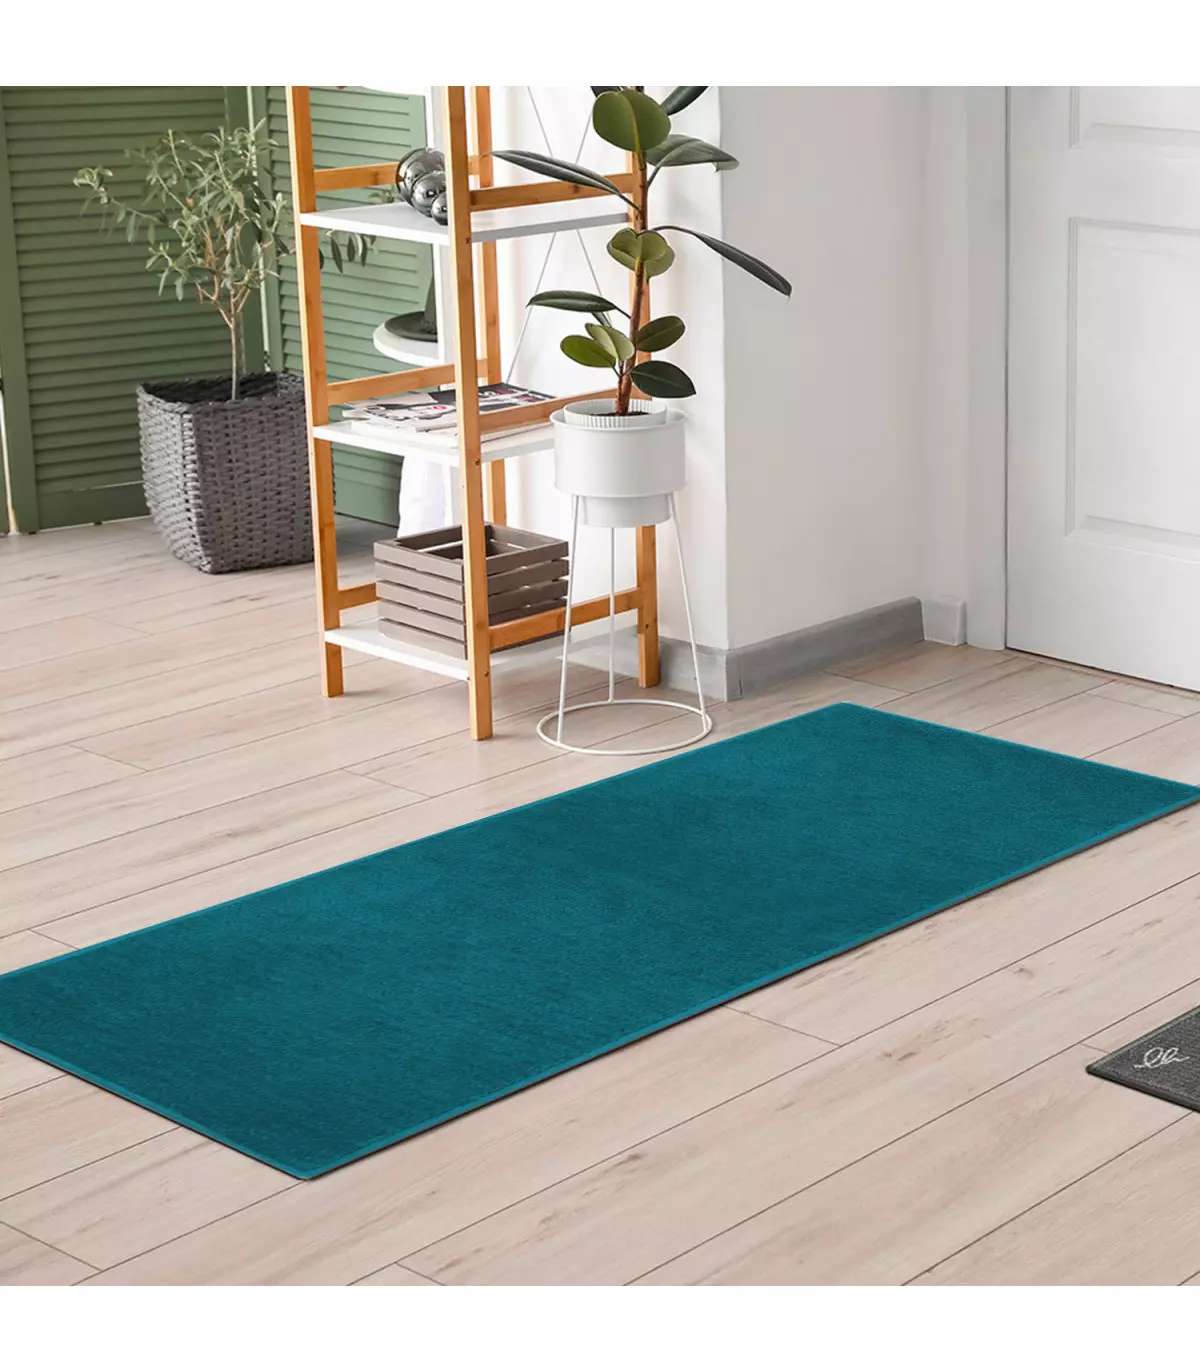 Super absorbent magic carpet doormat GLOBAL model large format